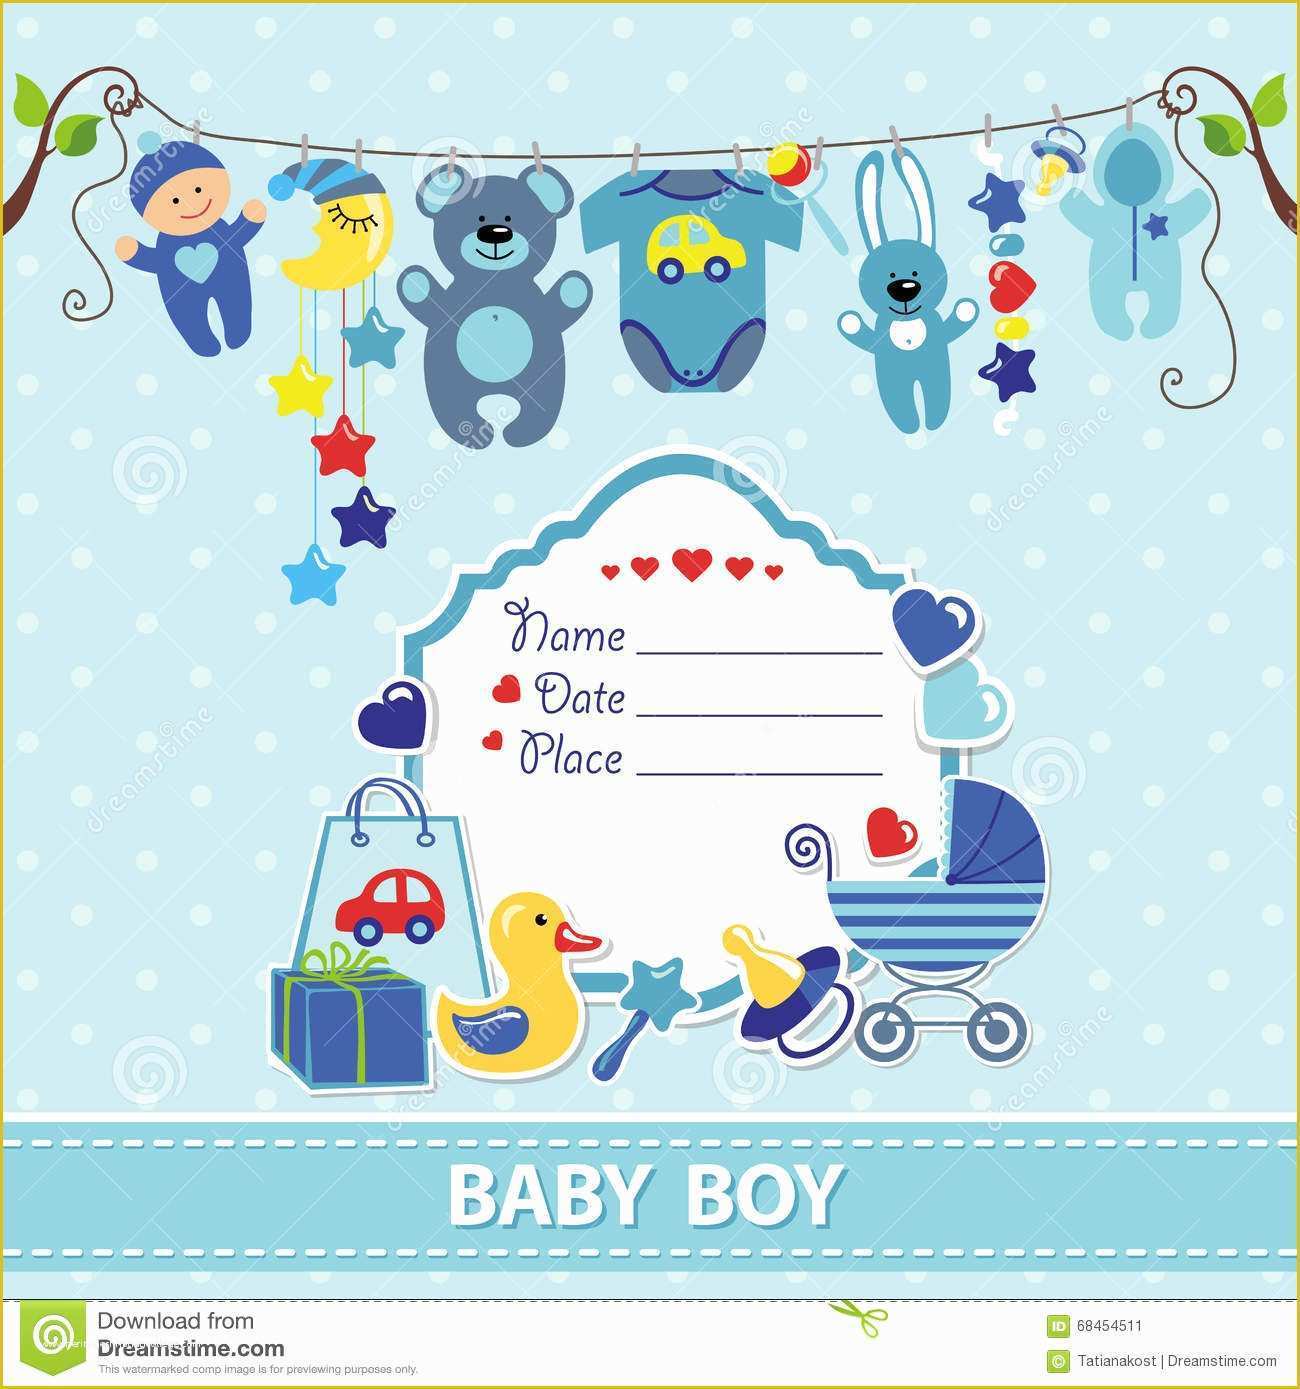 Baby Shower Invitations Templates Free Download Of Free Baby Shower Labels to Download for Boy New Born Card